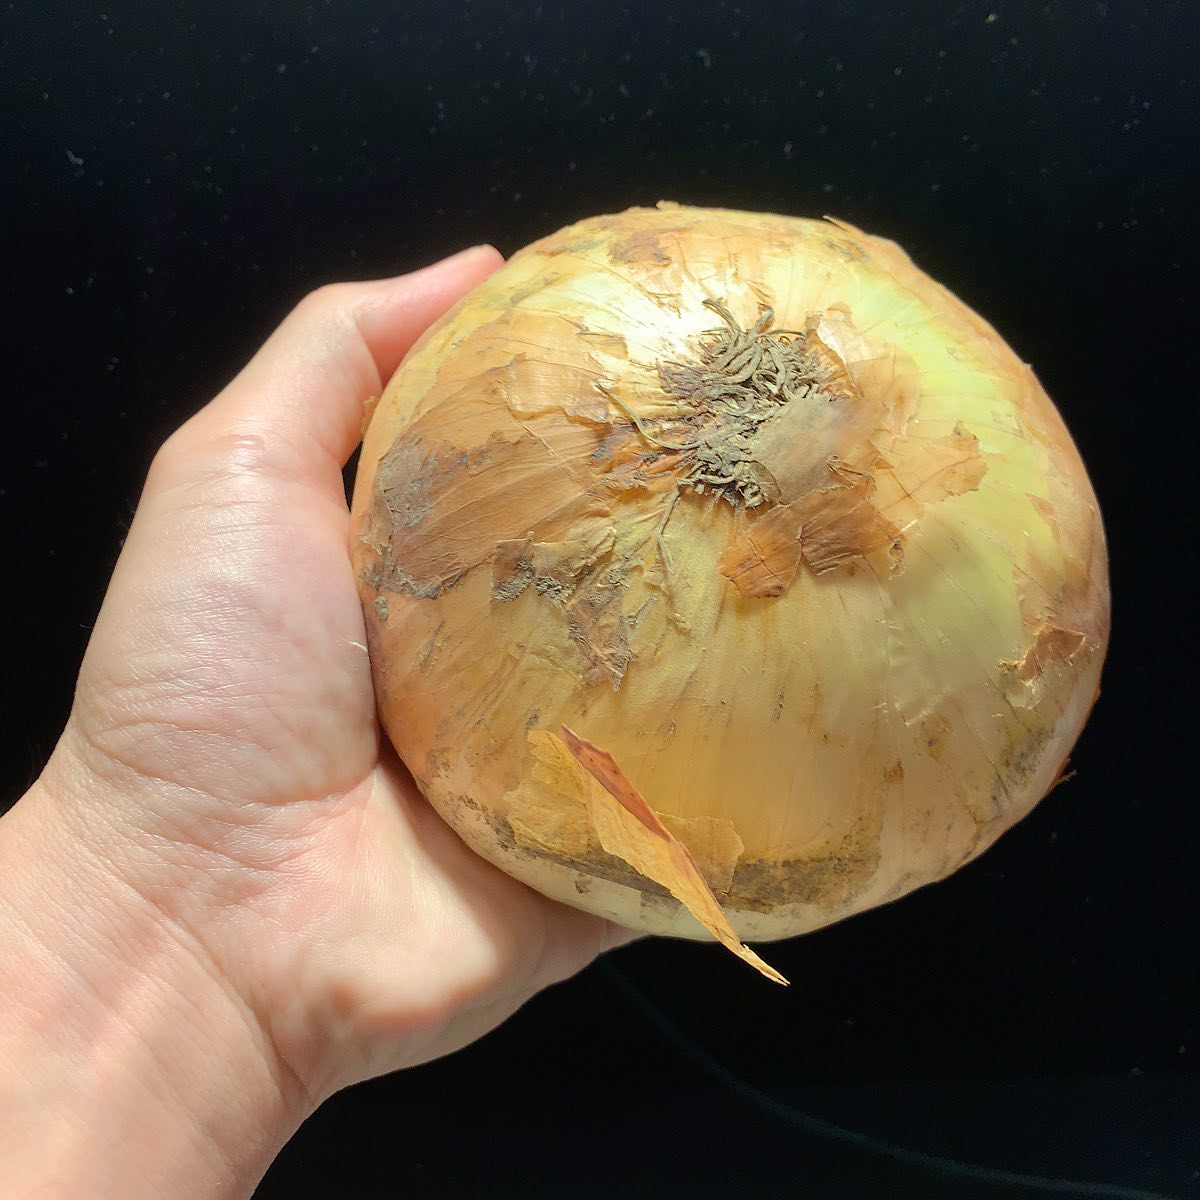 Huge! #onion